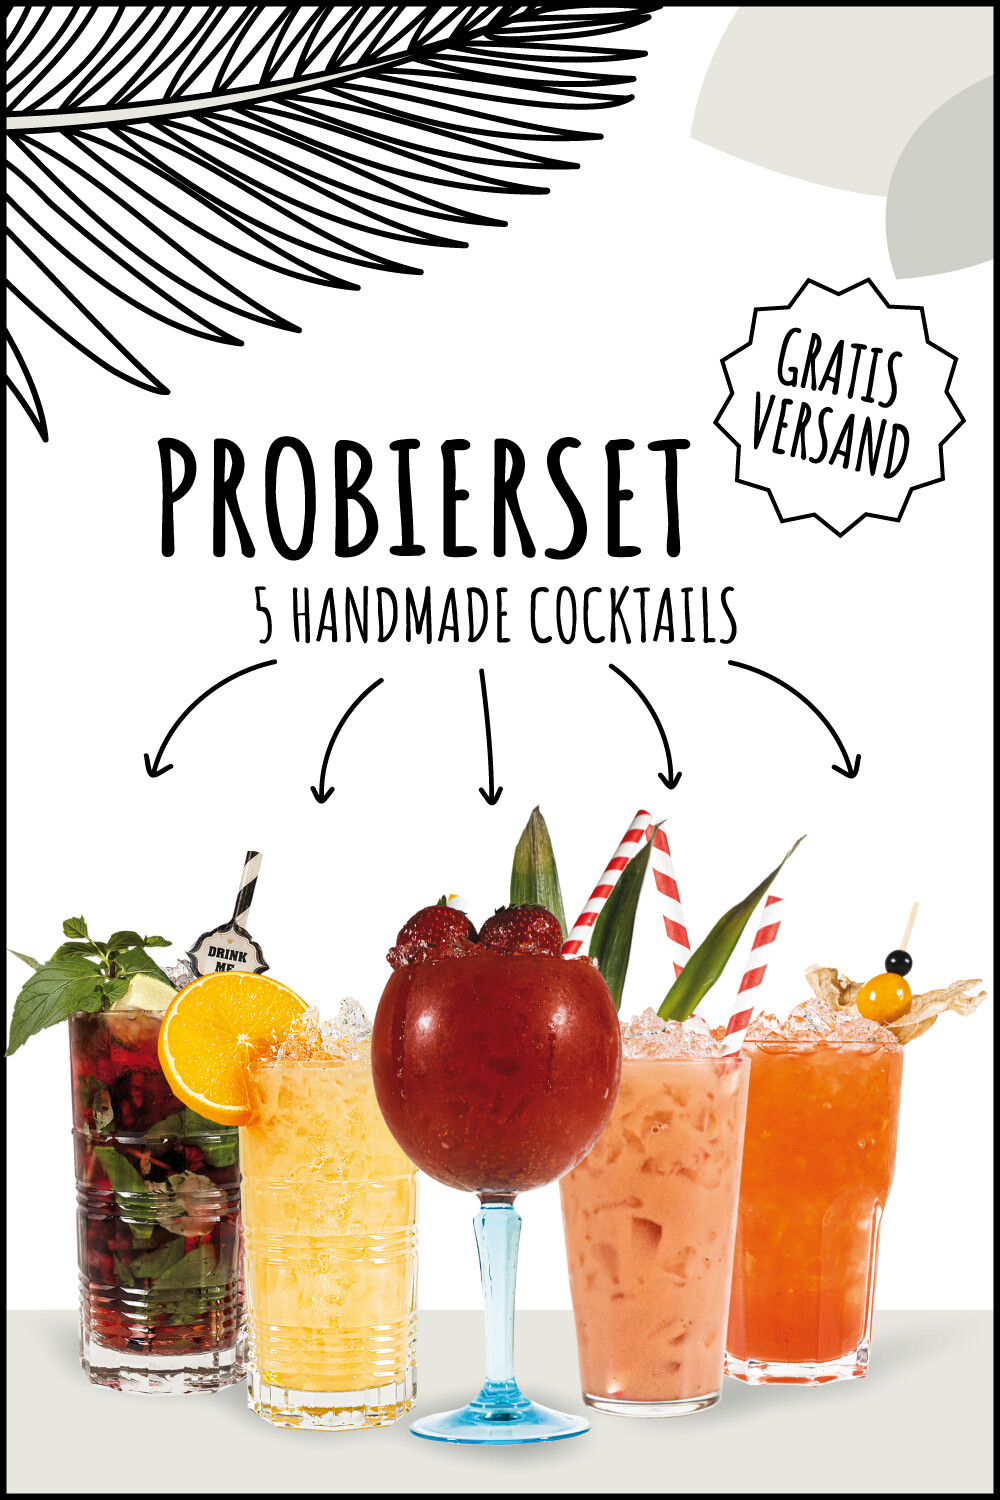 Probierset - 5 Handmade Cocktails